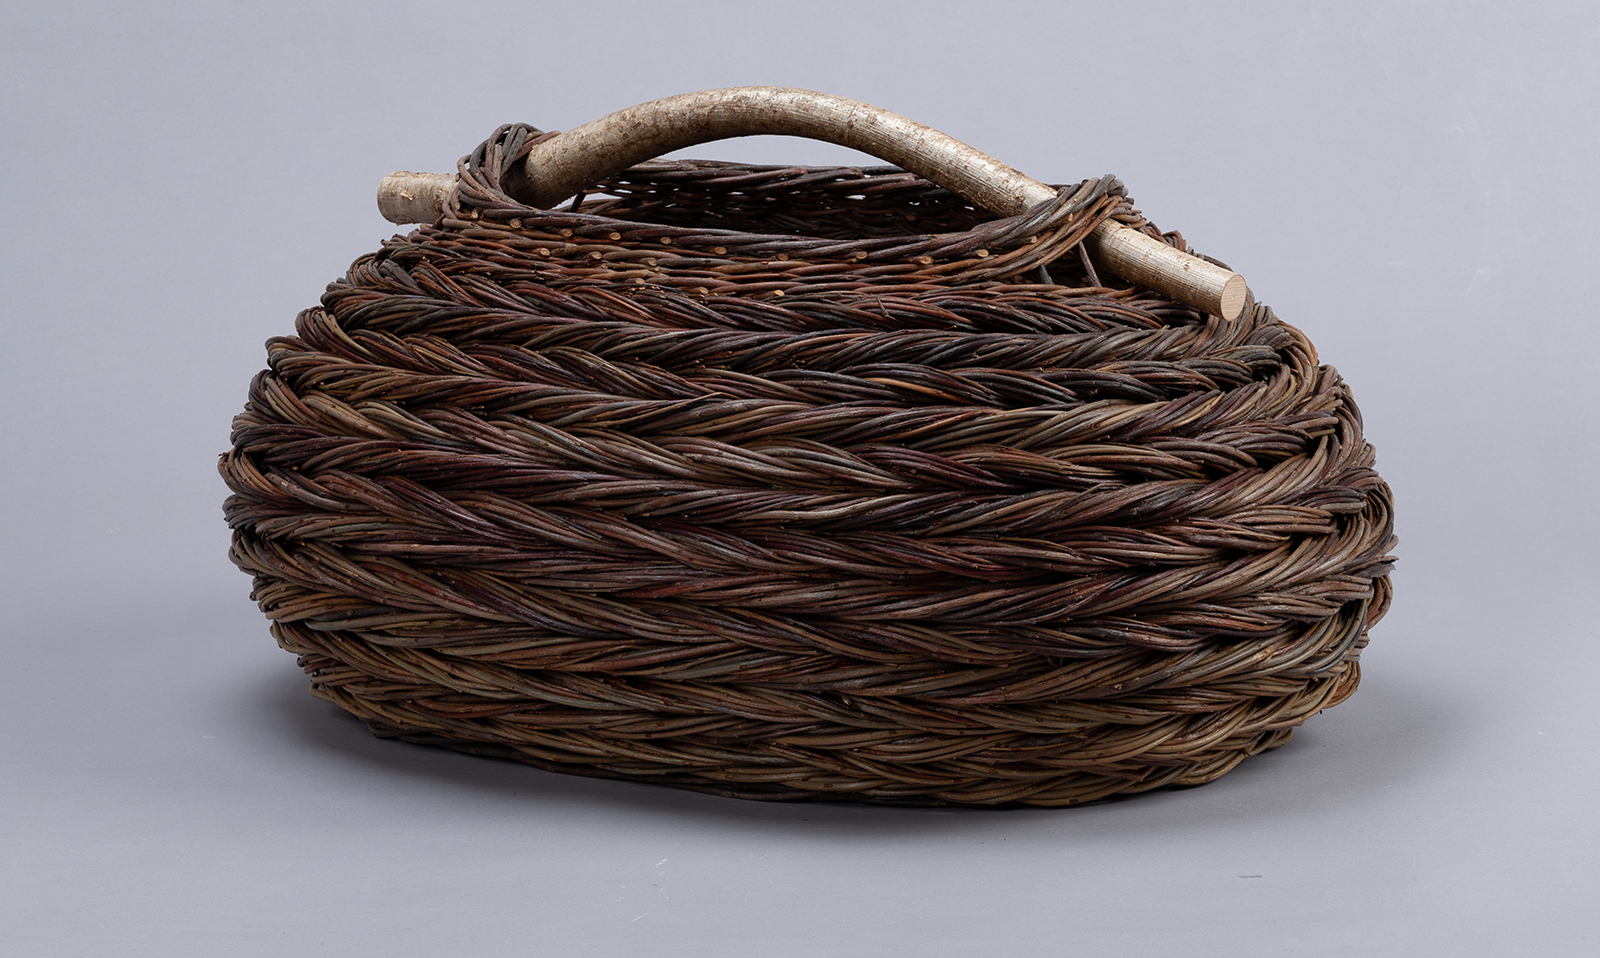 Large scale oval herringbone weave basket